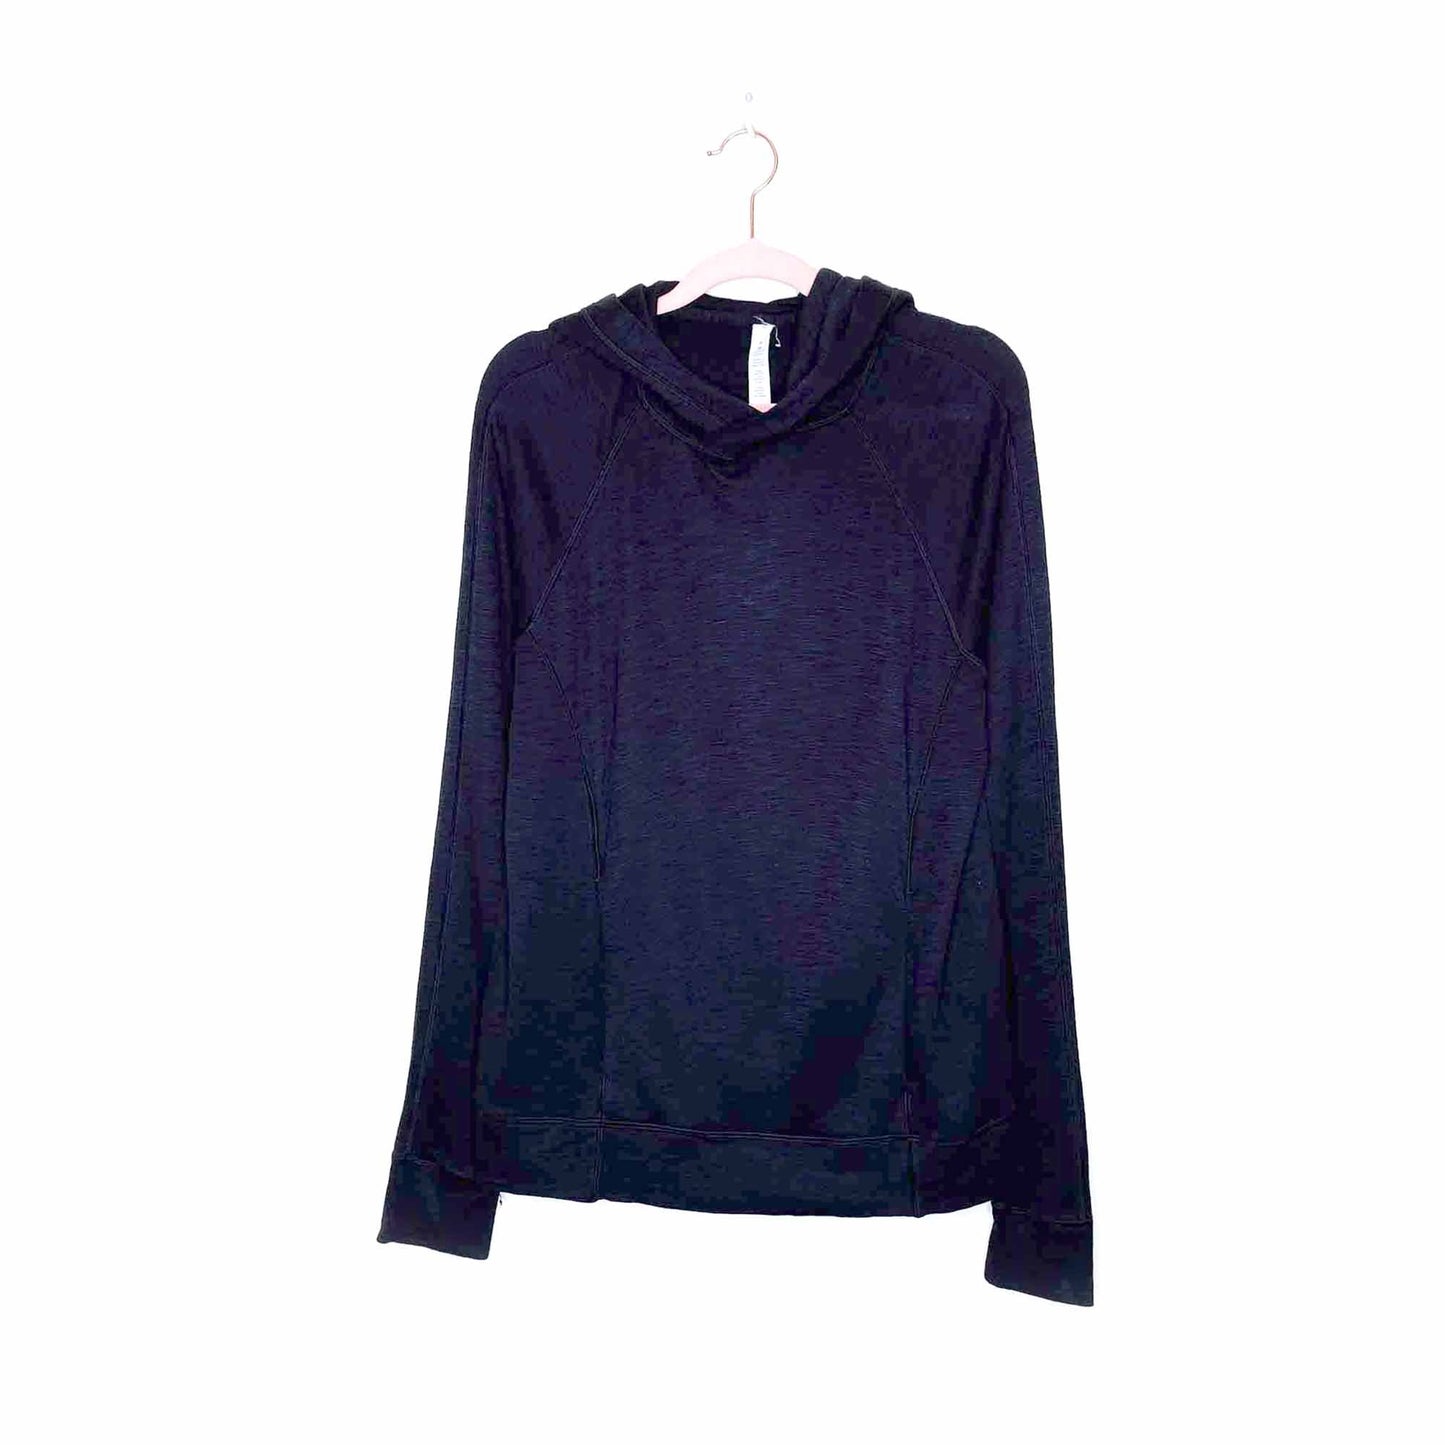 lululemon black pima cotton modal lightweight hoodie - size 6